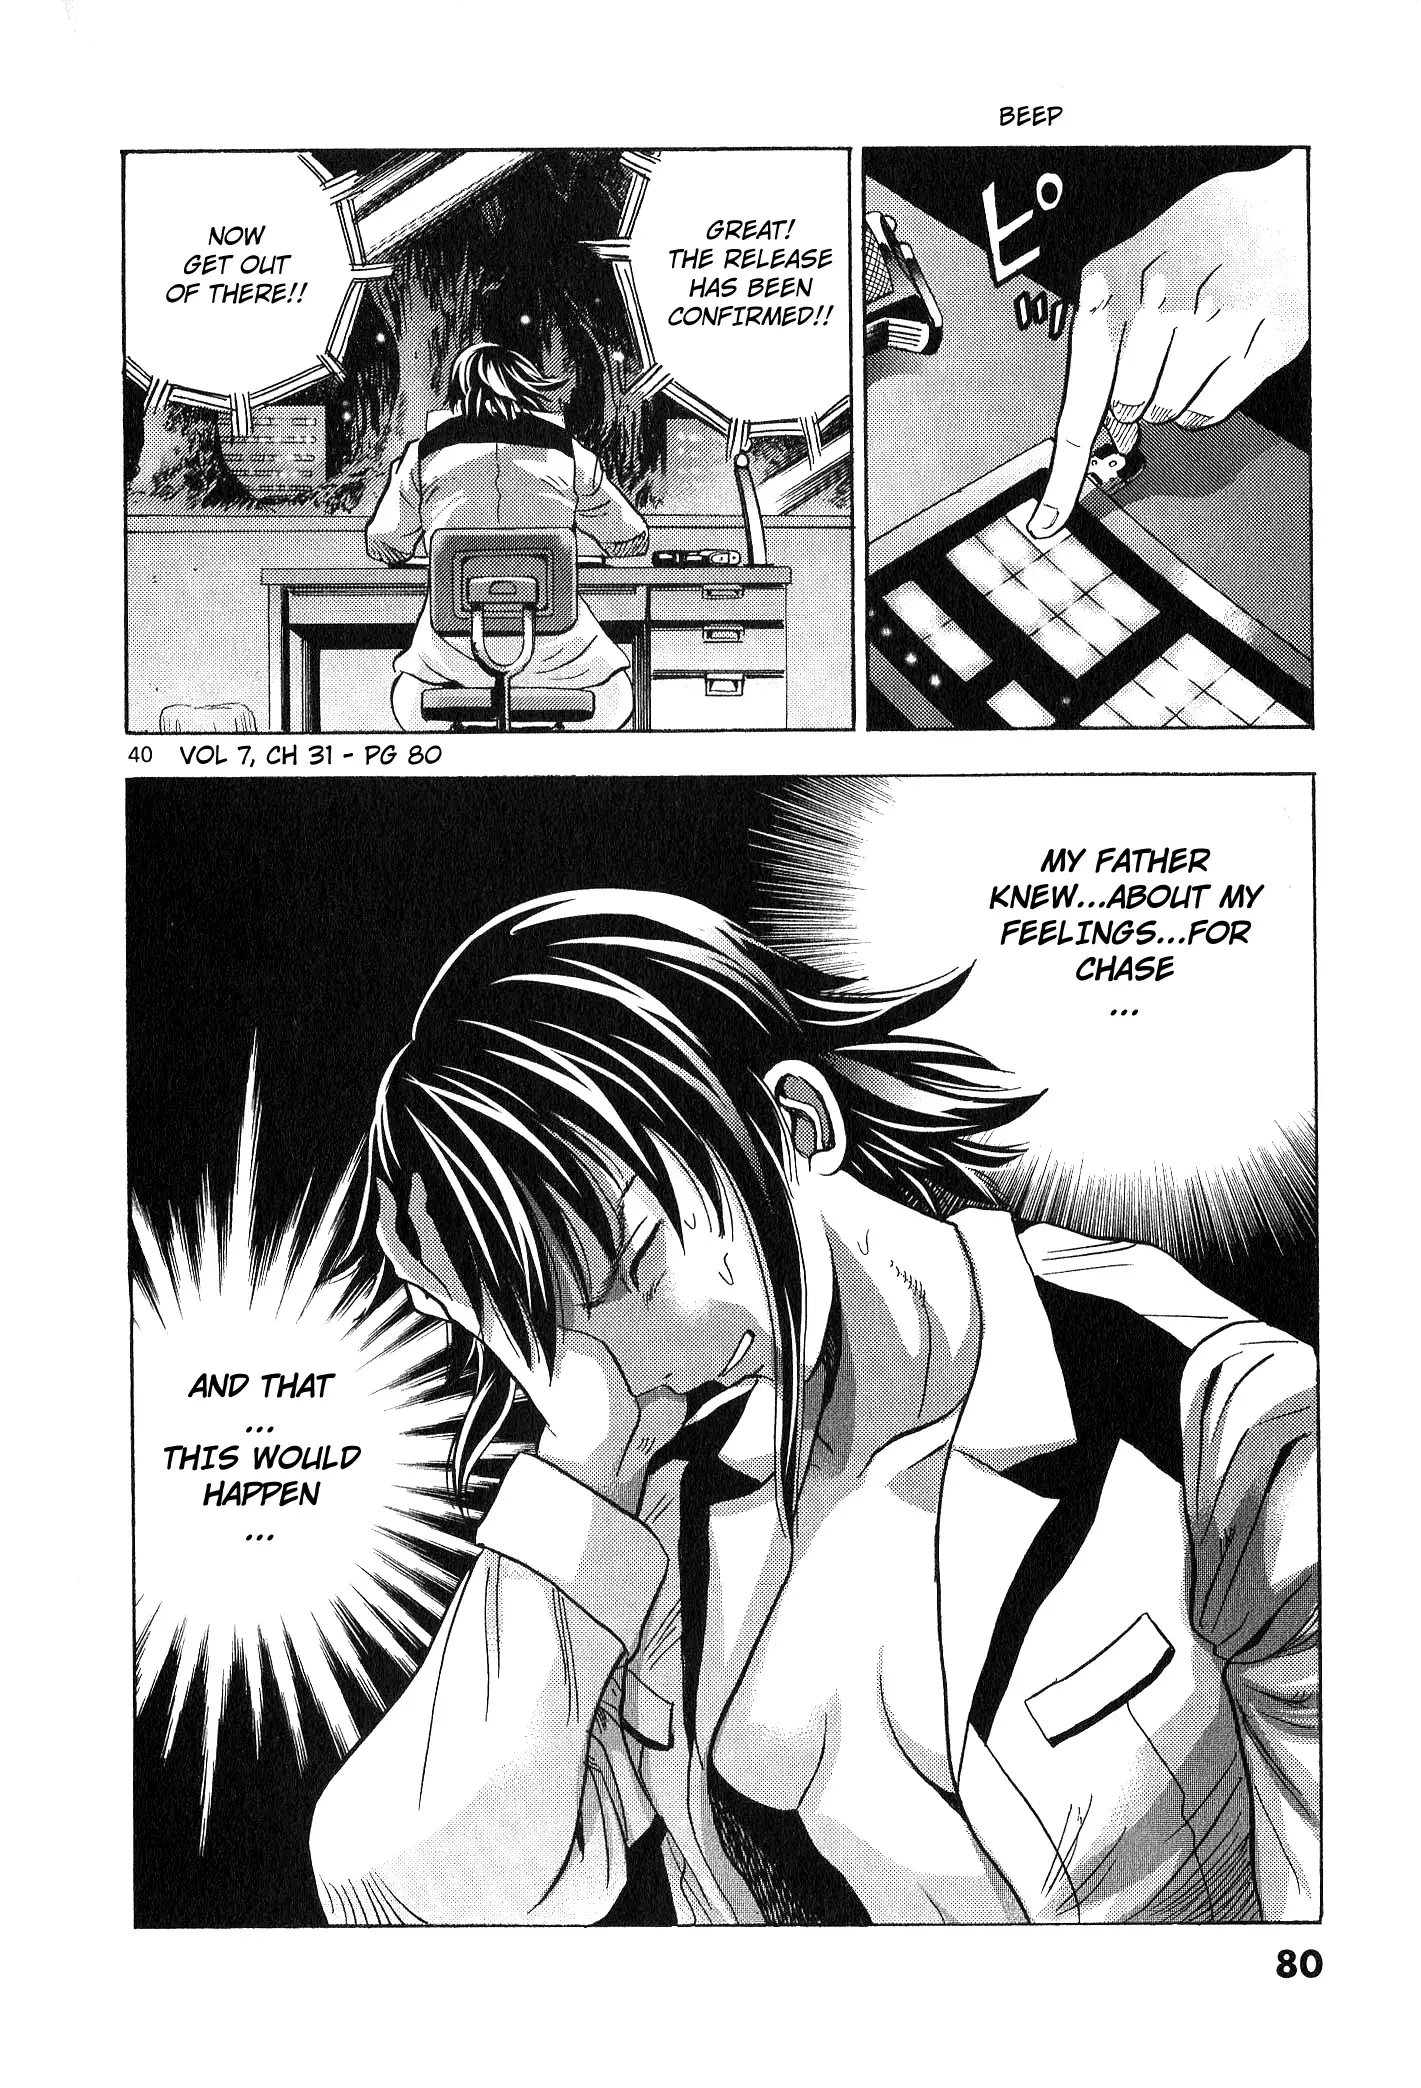 Mobile Suit Gundam Aggressor - 31 page 37-46125e85